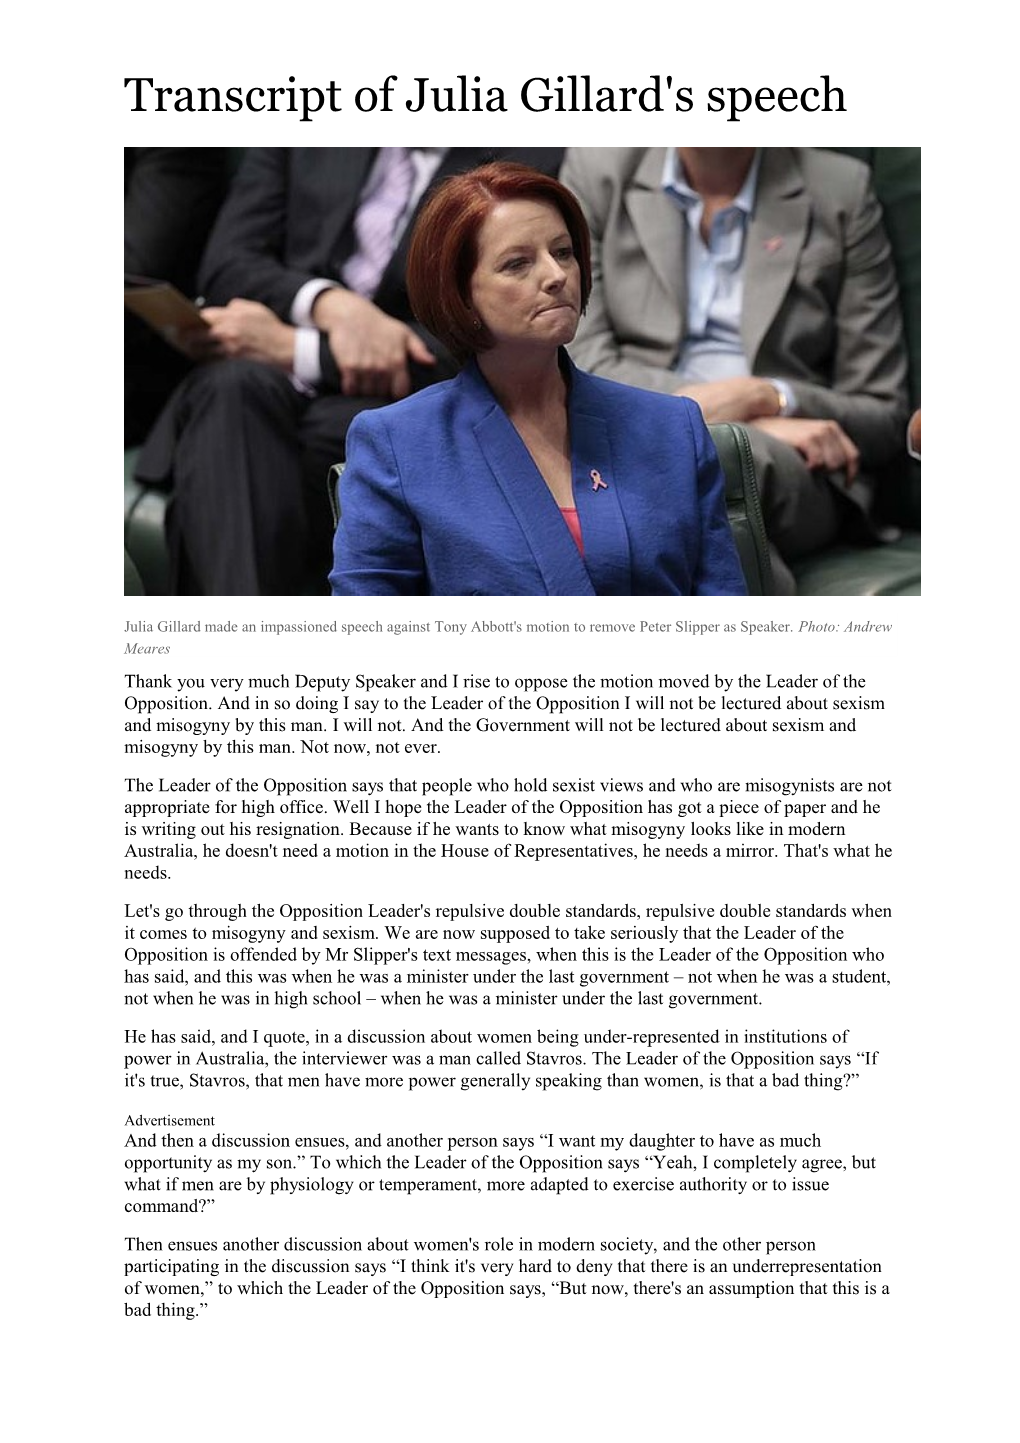 Transcript of Julia Gillard's Speech